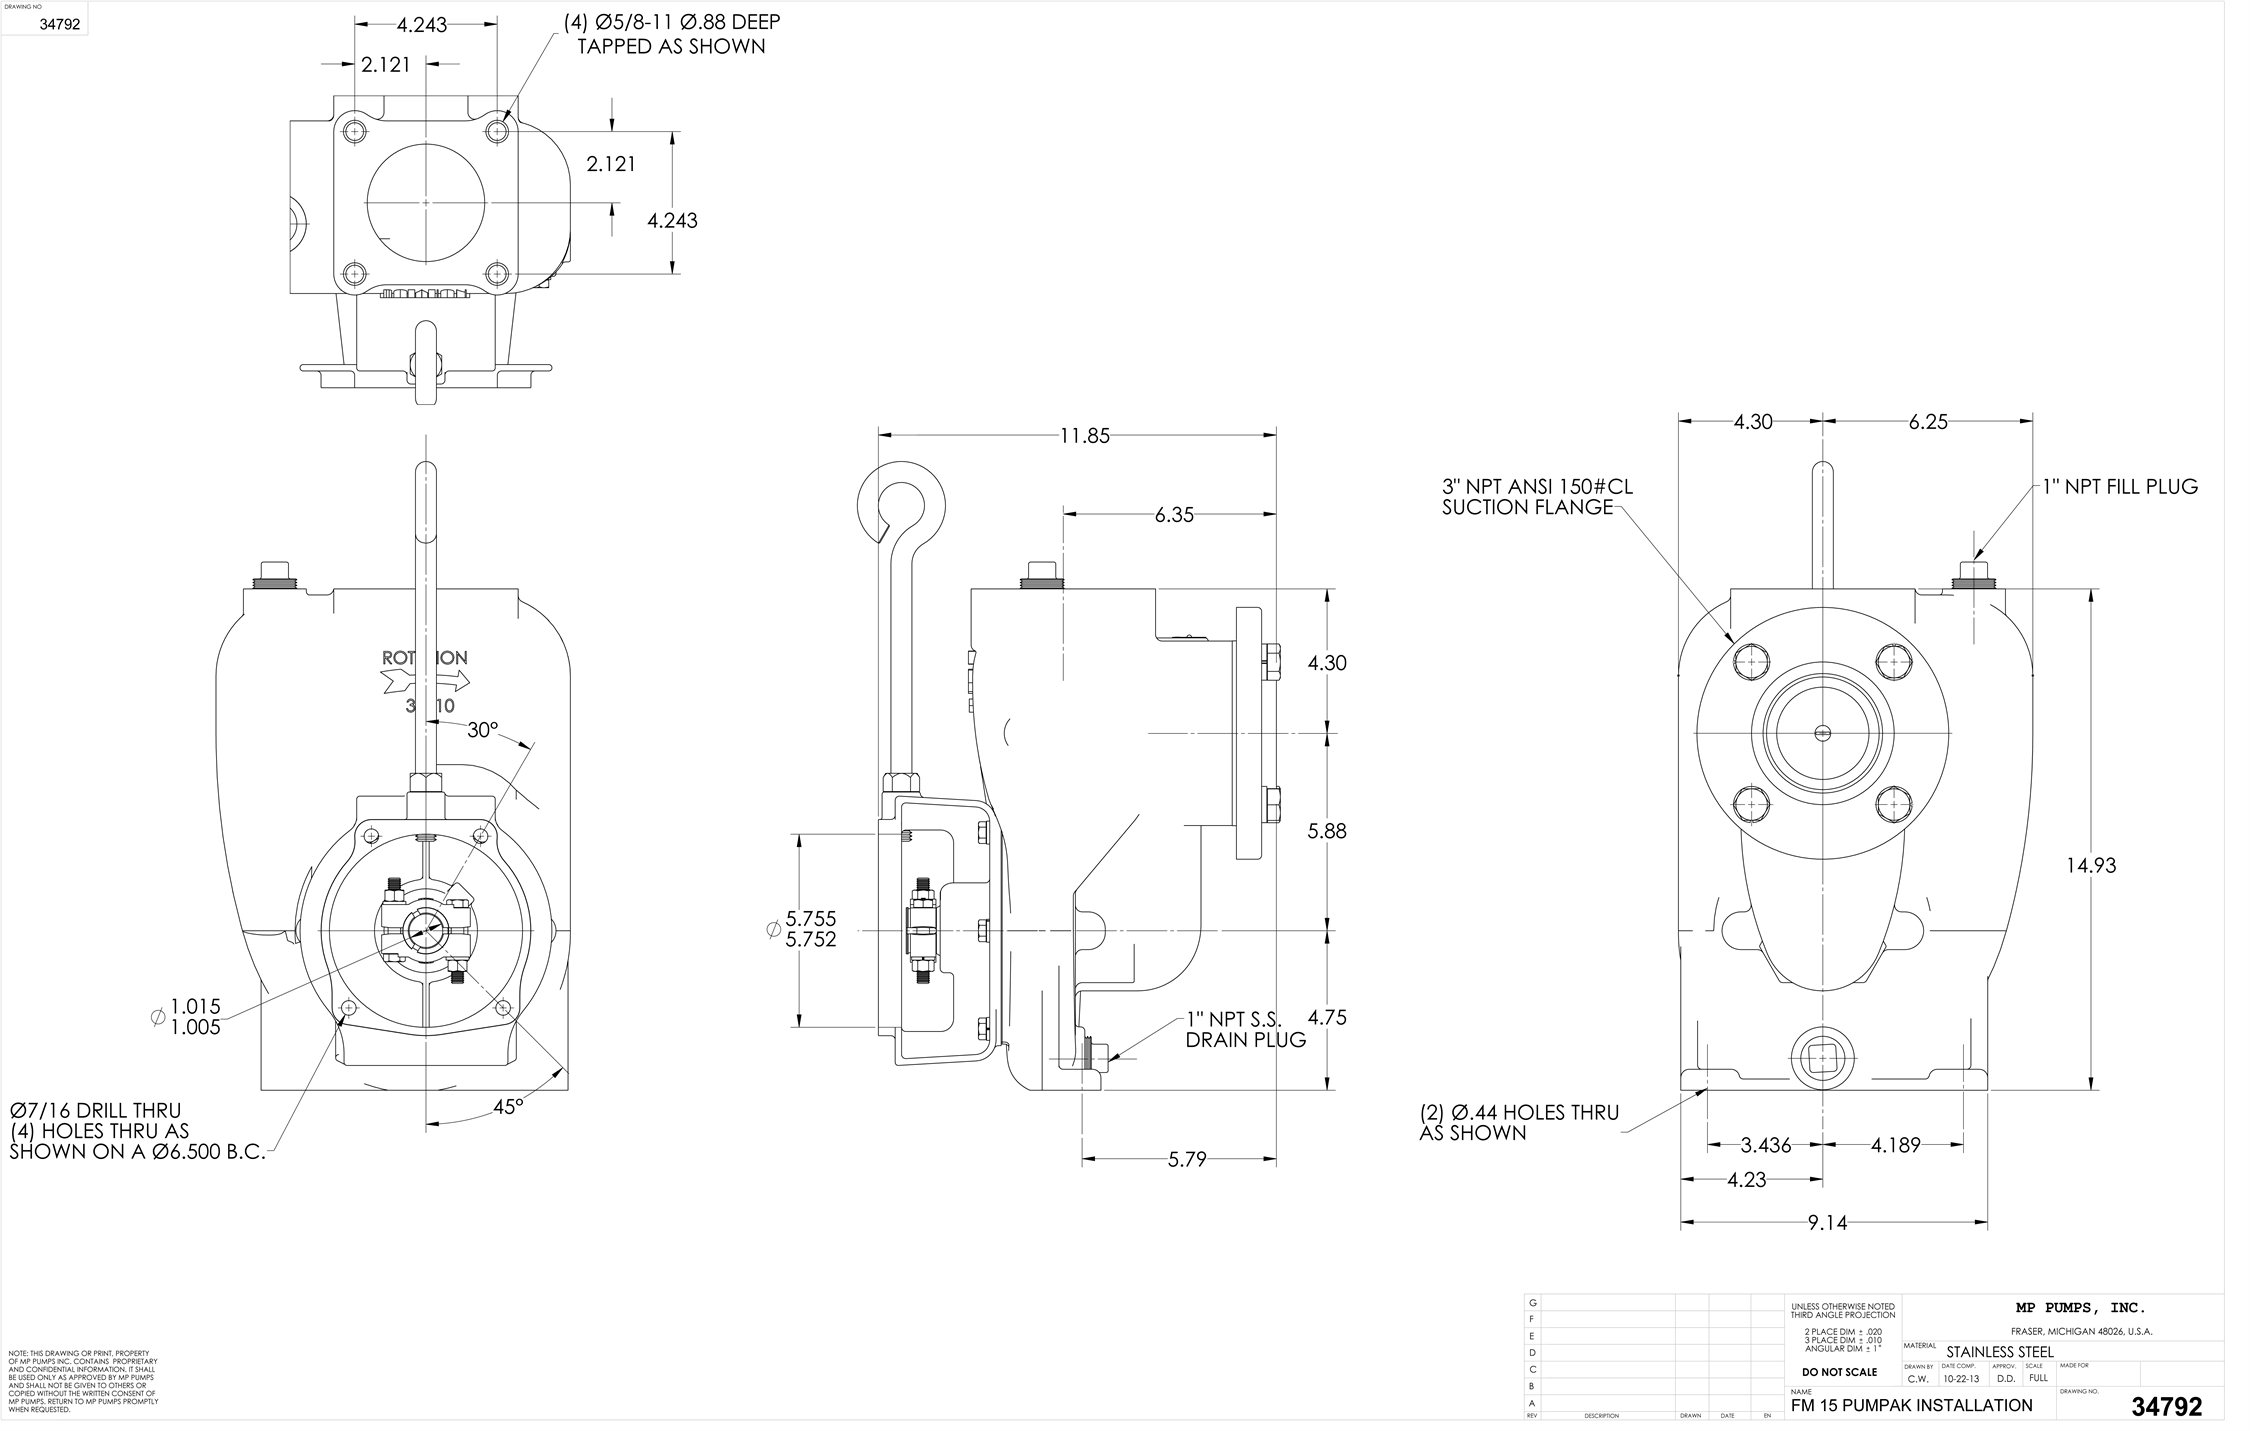 flomax-15-316-ss-hydraulic-industrial-vacuum-pump_drawing-34792